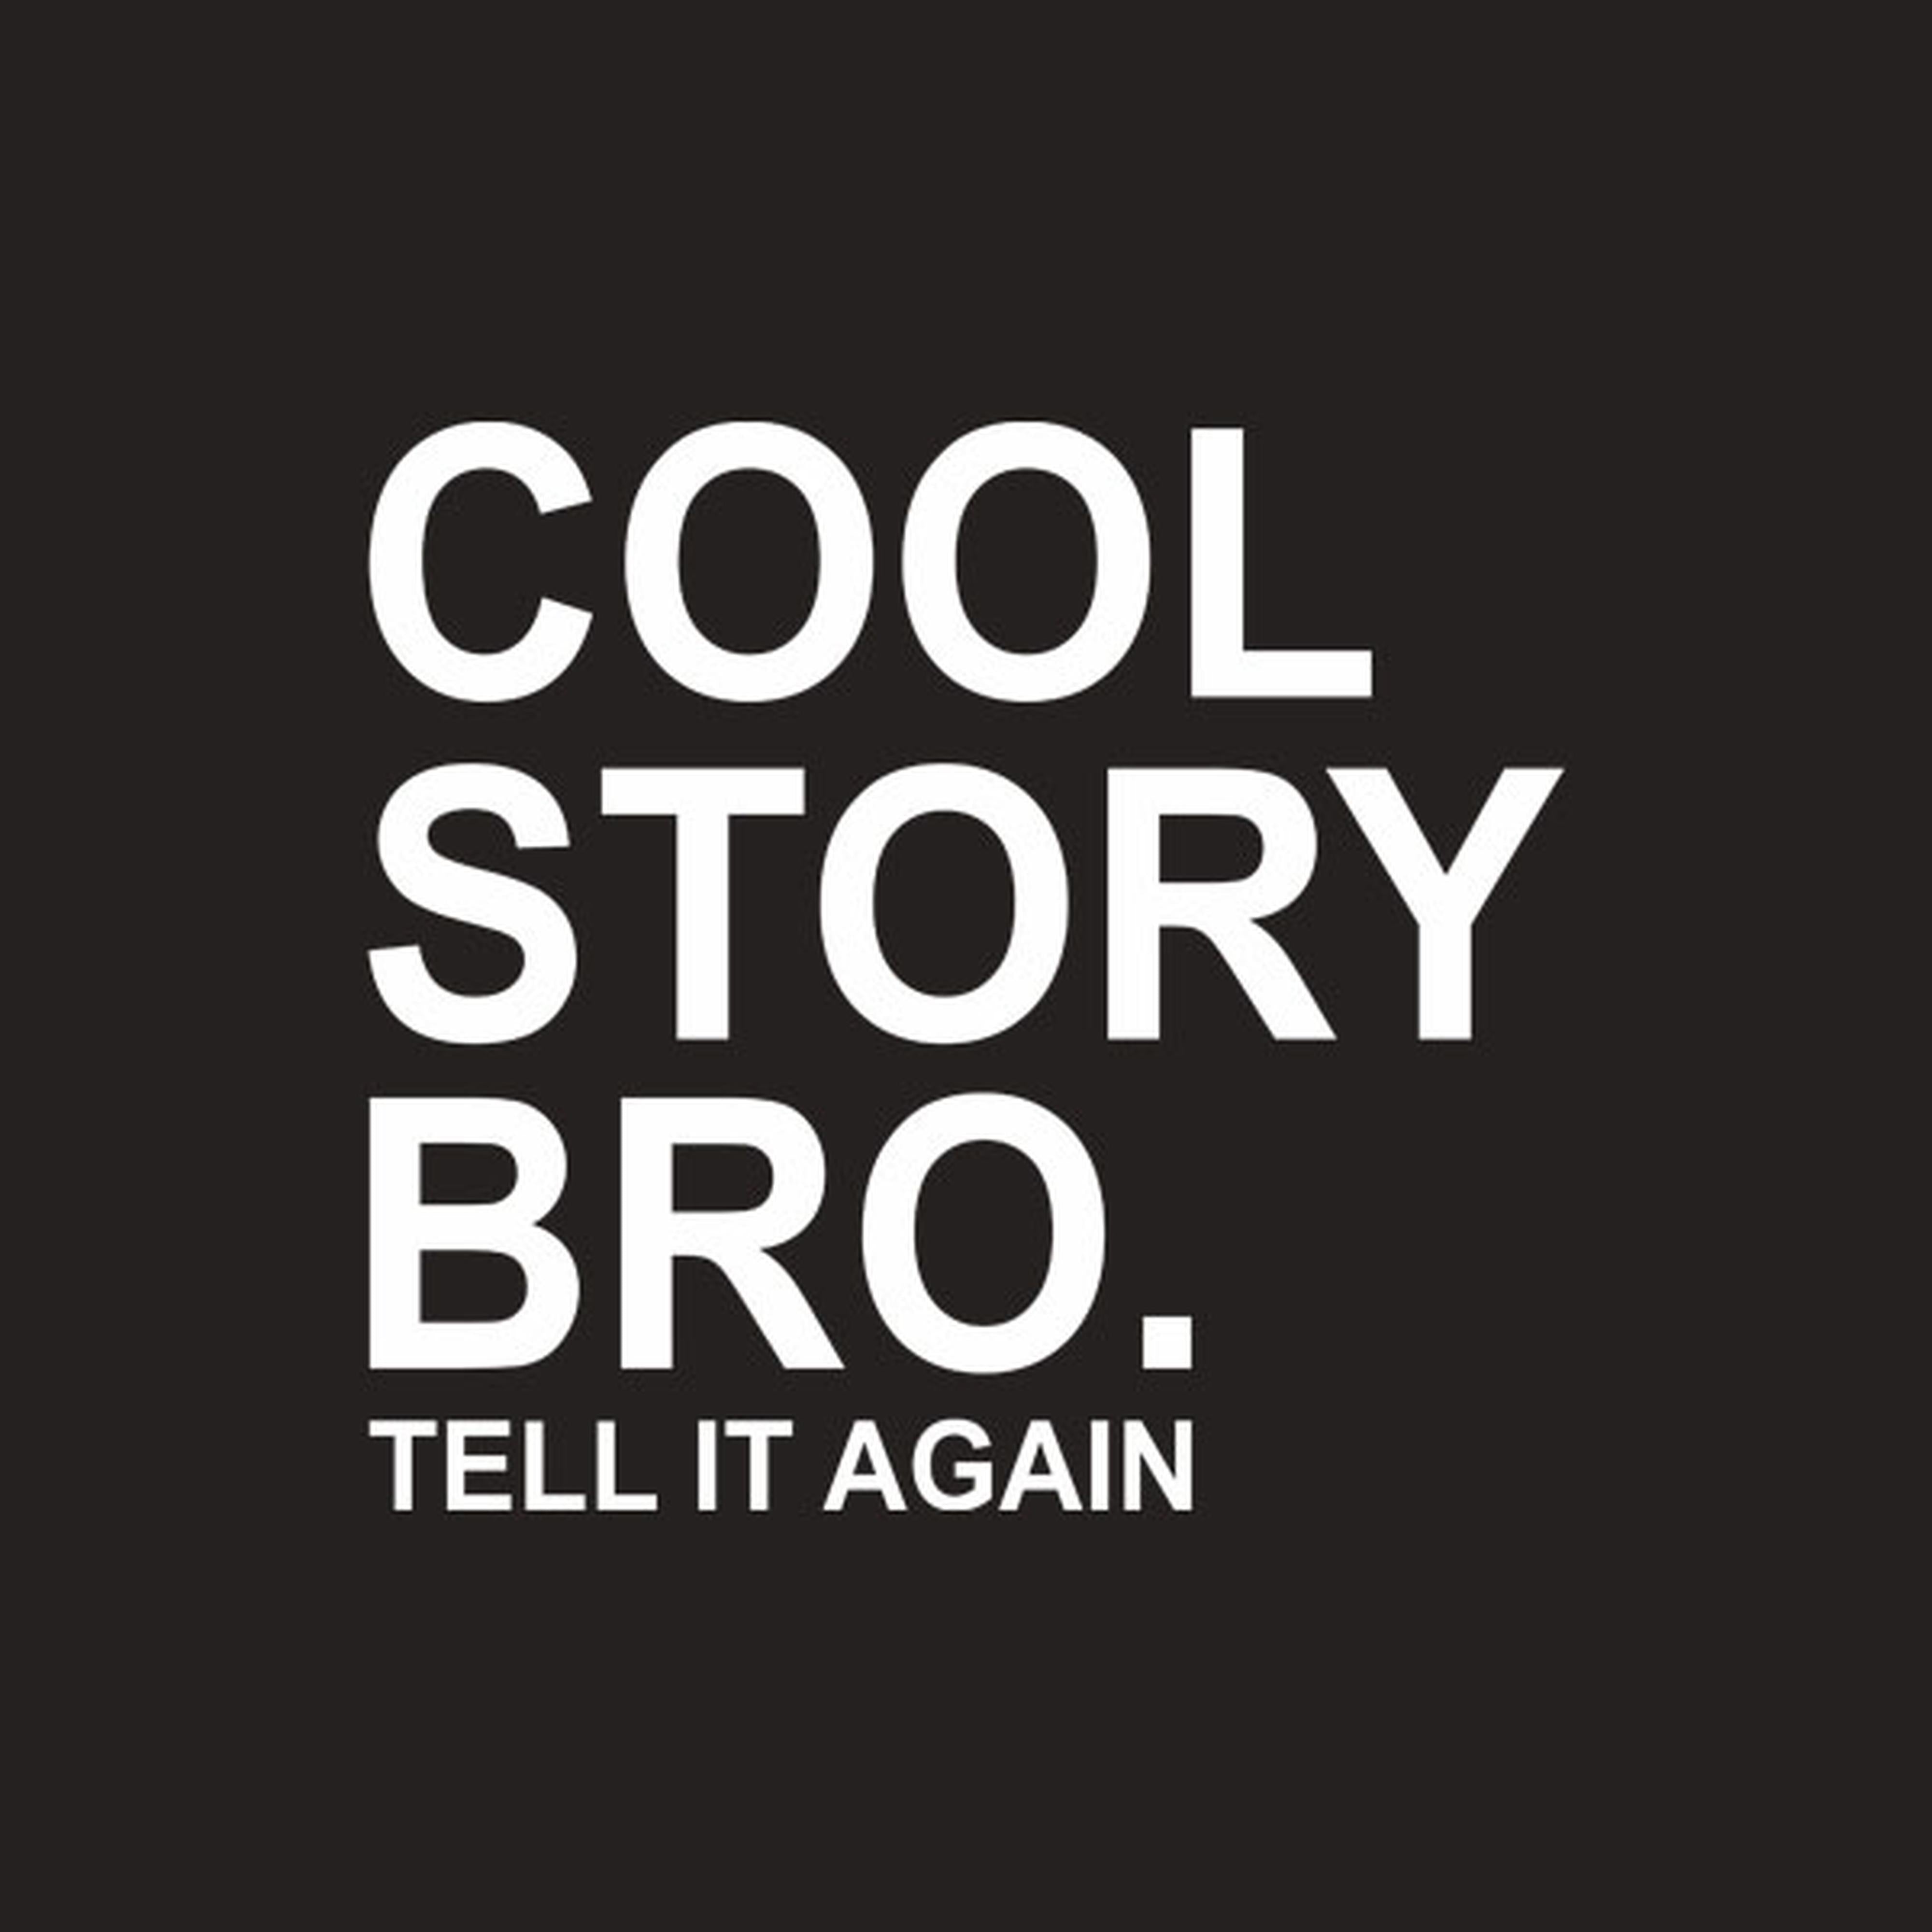 Cool story bro. Tell it again - T-shirt